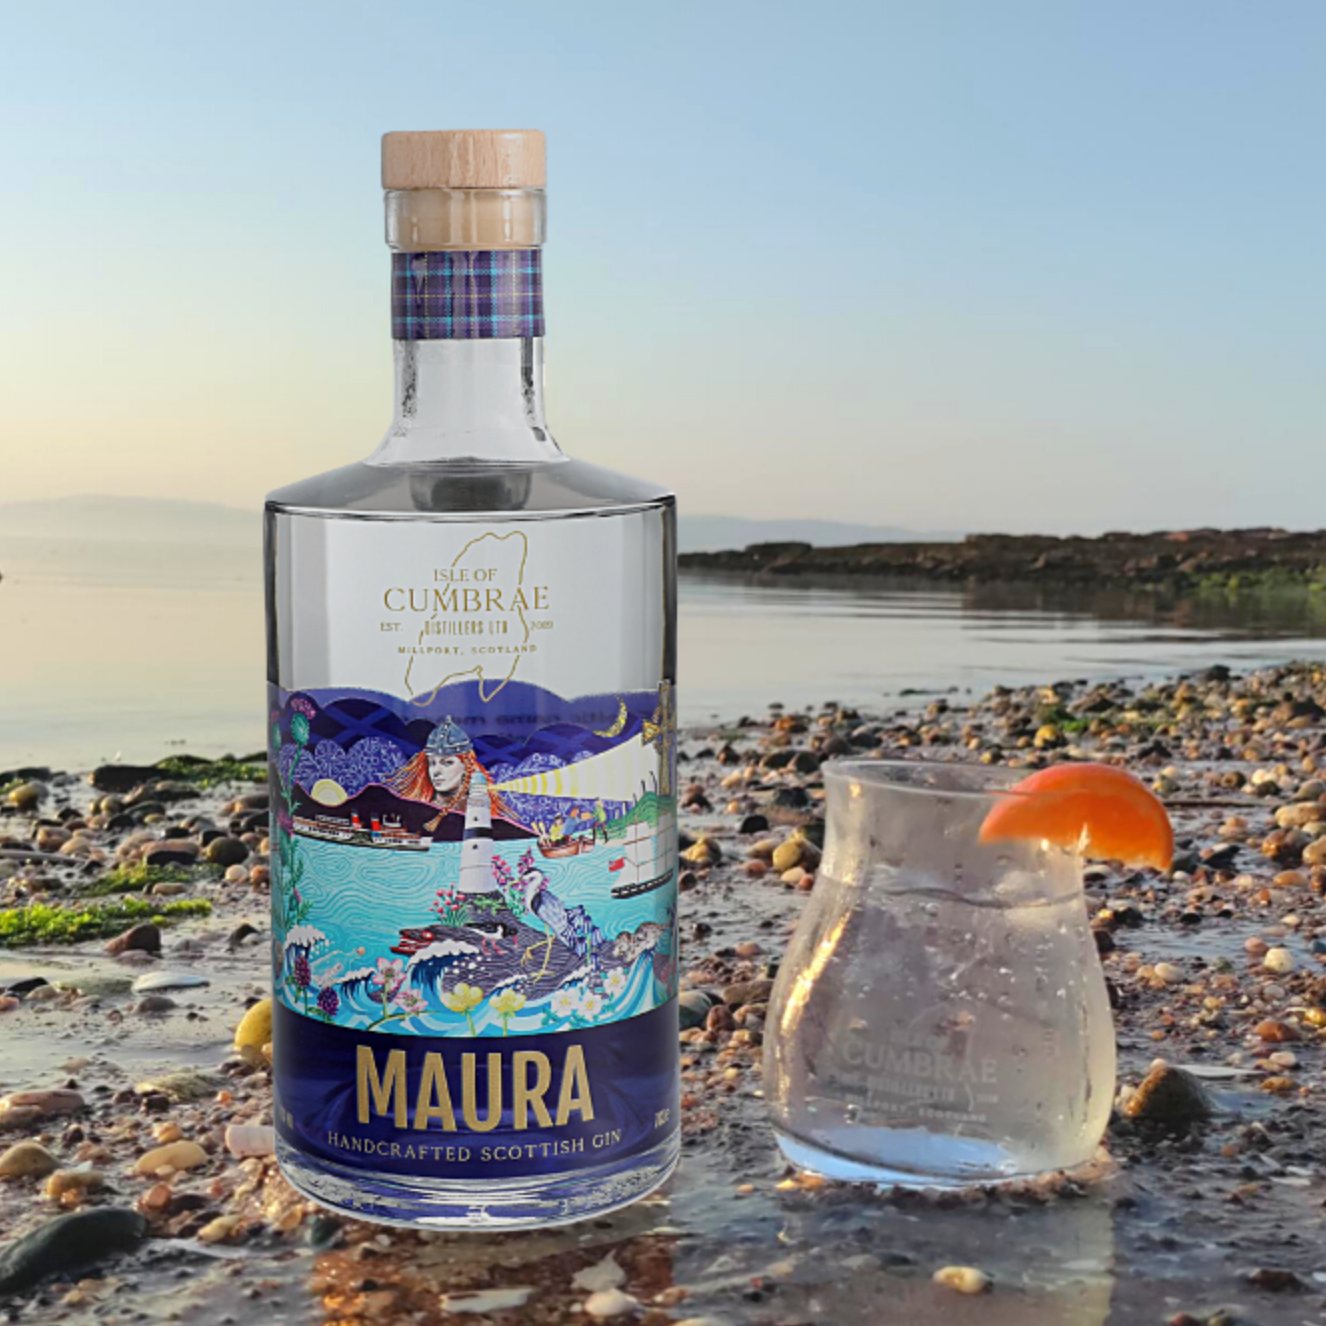 Maura Gin, Isle of Cumbrae Distillers Ltd